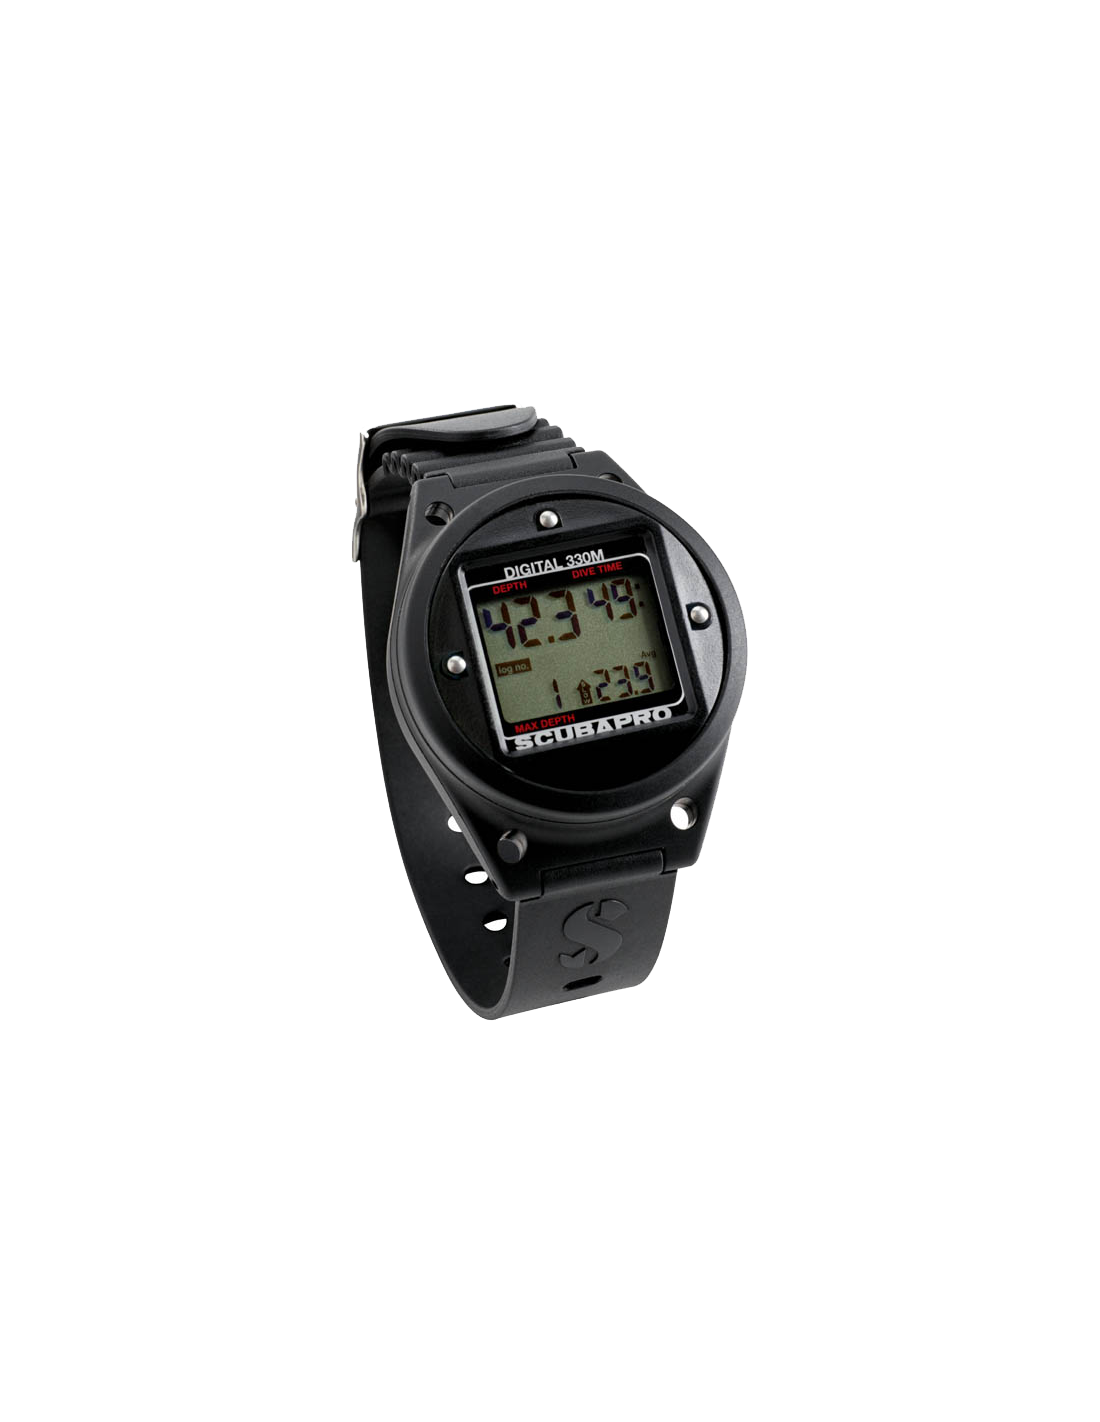 Scubapro digital 330 bottom timer with watch strap